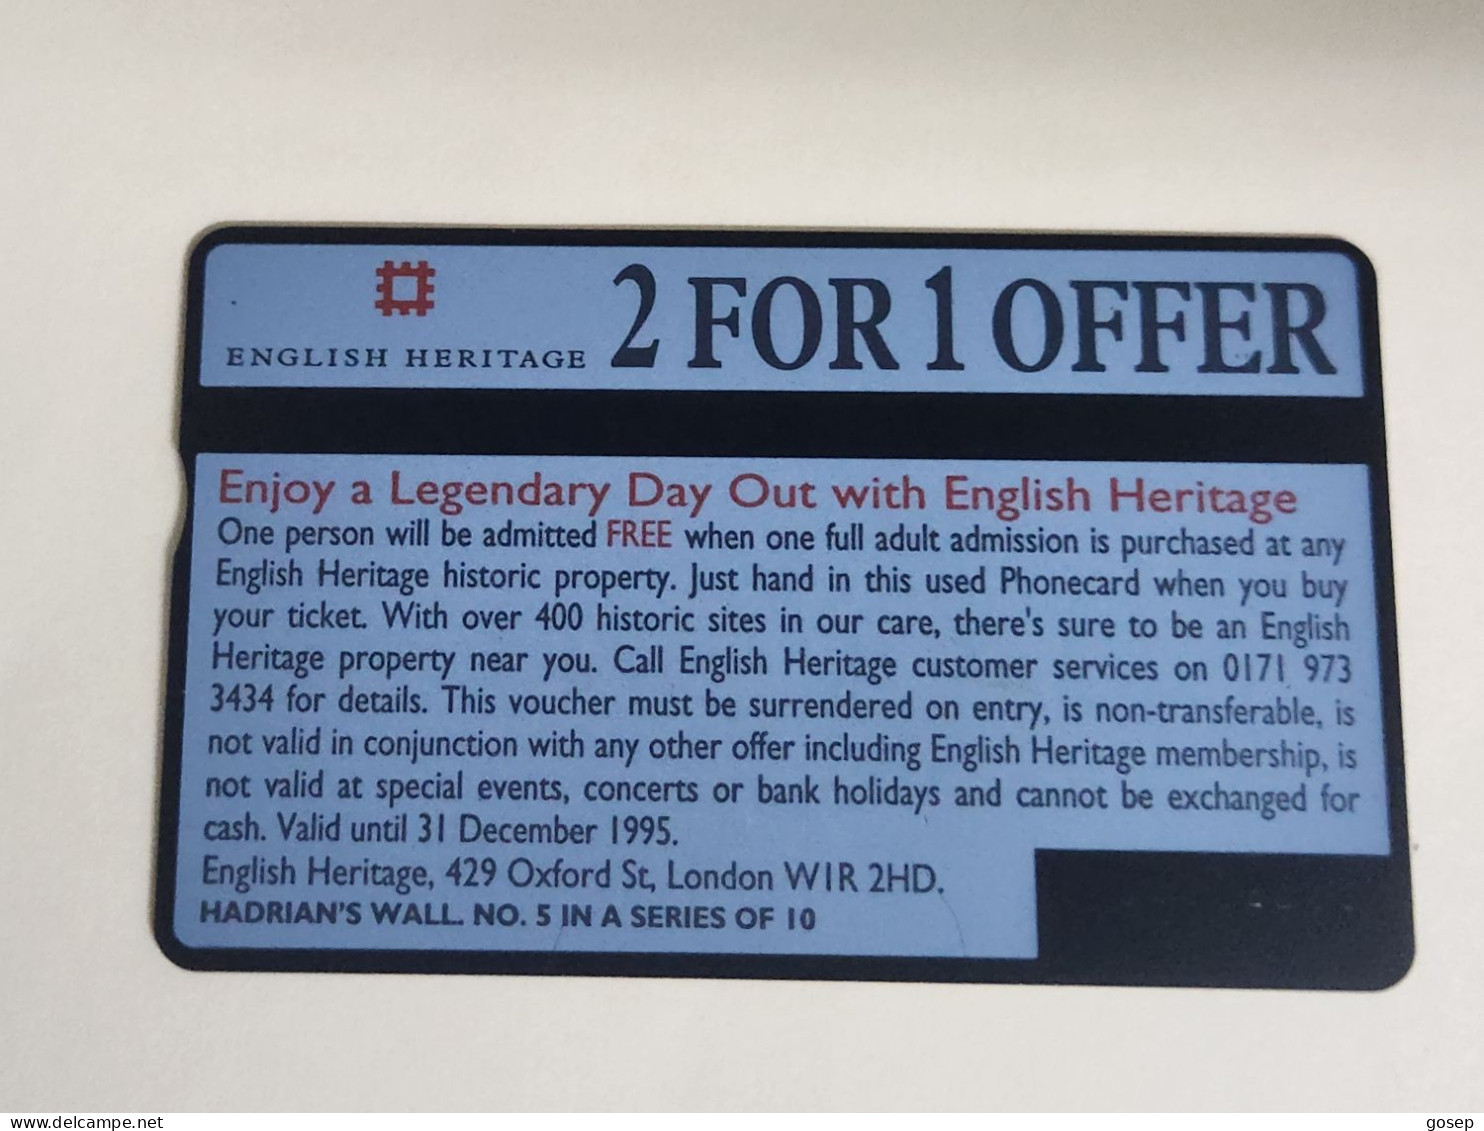 United Kingdom-(BTA117)HERITAGE-Hadrian's Wall-(202)(100units)(527F08213)price Cataloge3.00£-used+1card Prepiad Free - BT Advertising Issues